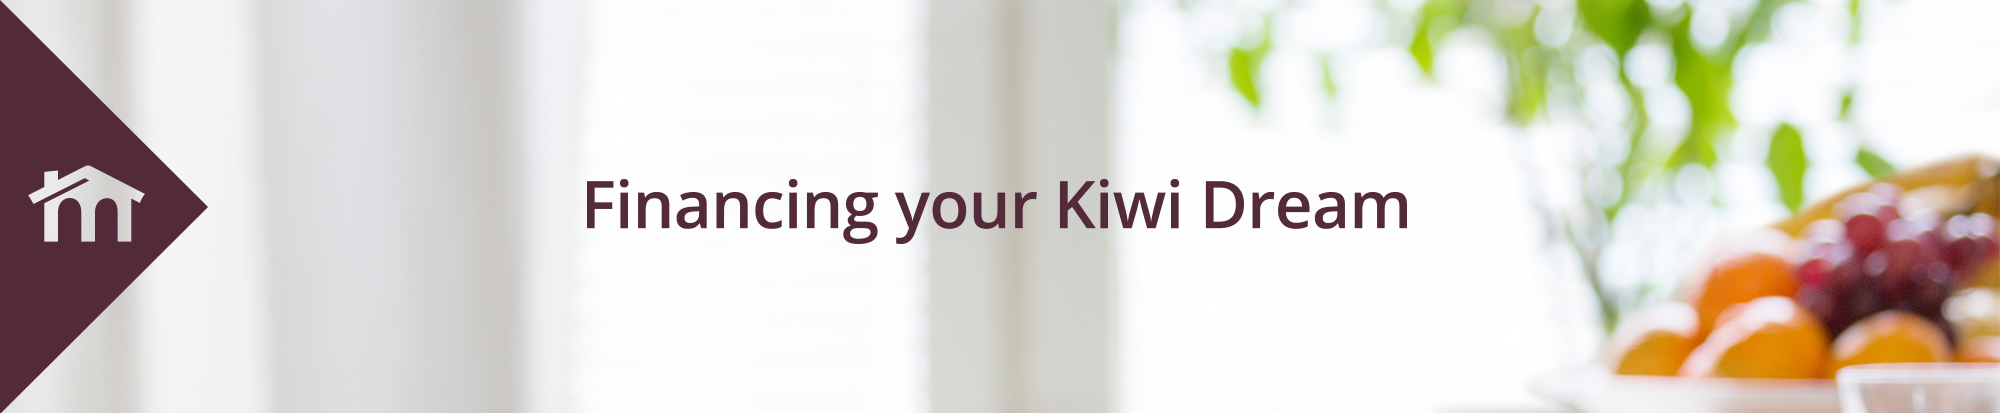 Financing your Kiwi Dream